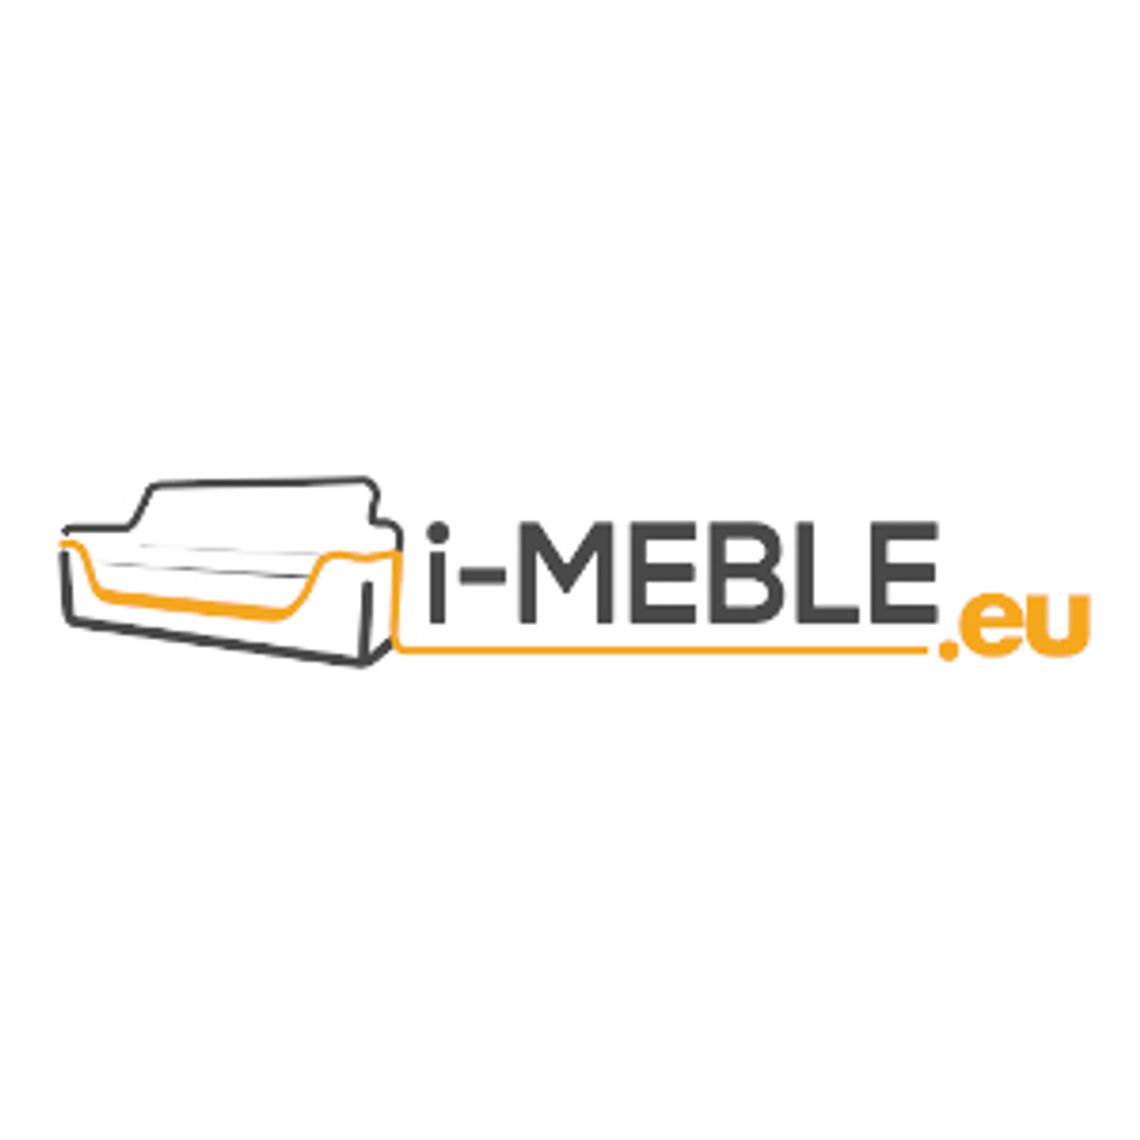 Sklep internetowy z meblami - i-MEBLE